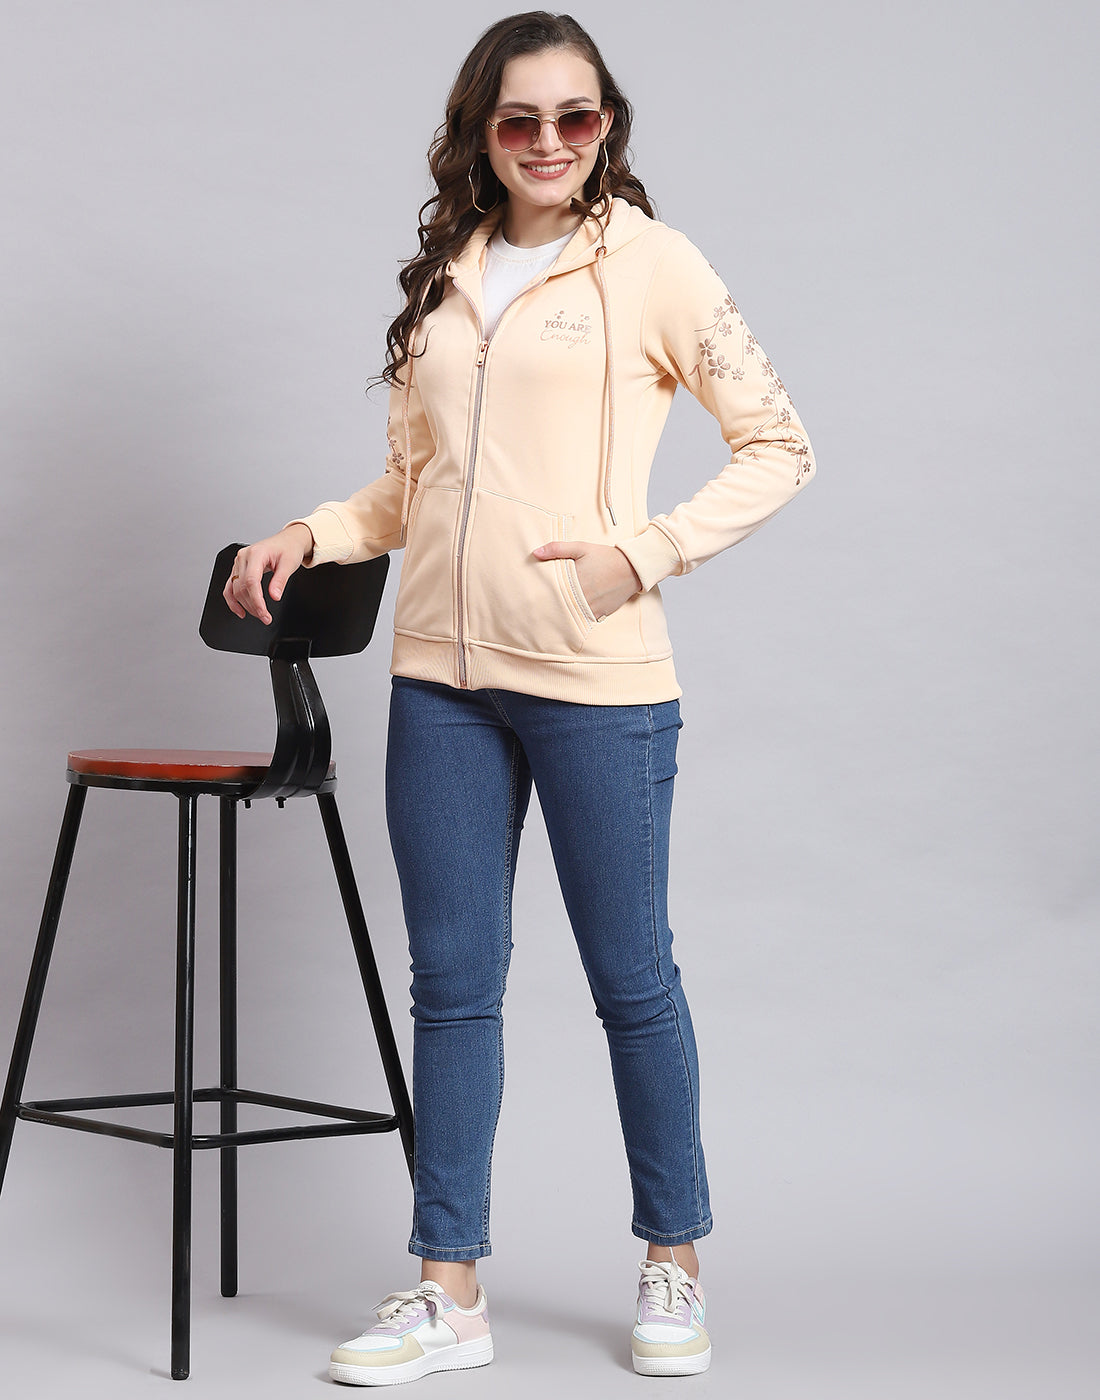 SweatyRocks Women's Casual Full Zip Crop Top Hoodie Sweatshirt Jacket,  Burgundy Solid, X-Small : : Clothing, Shoes & Accessories